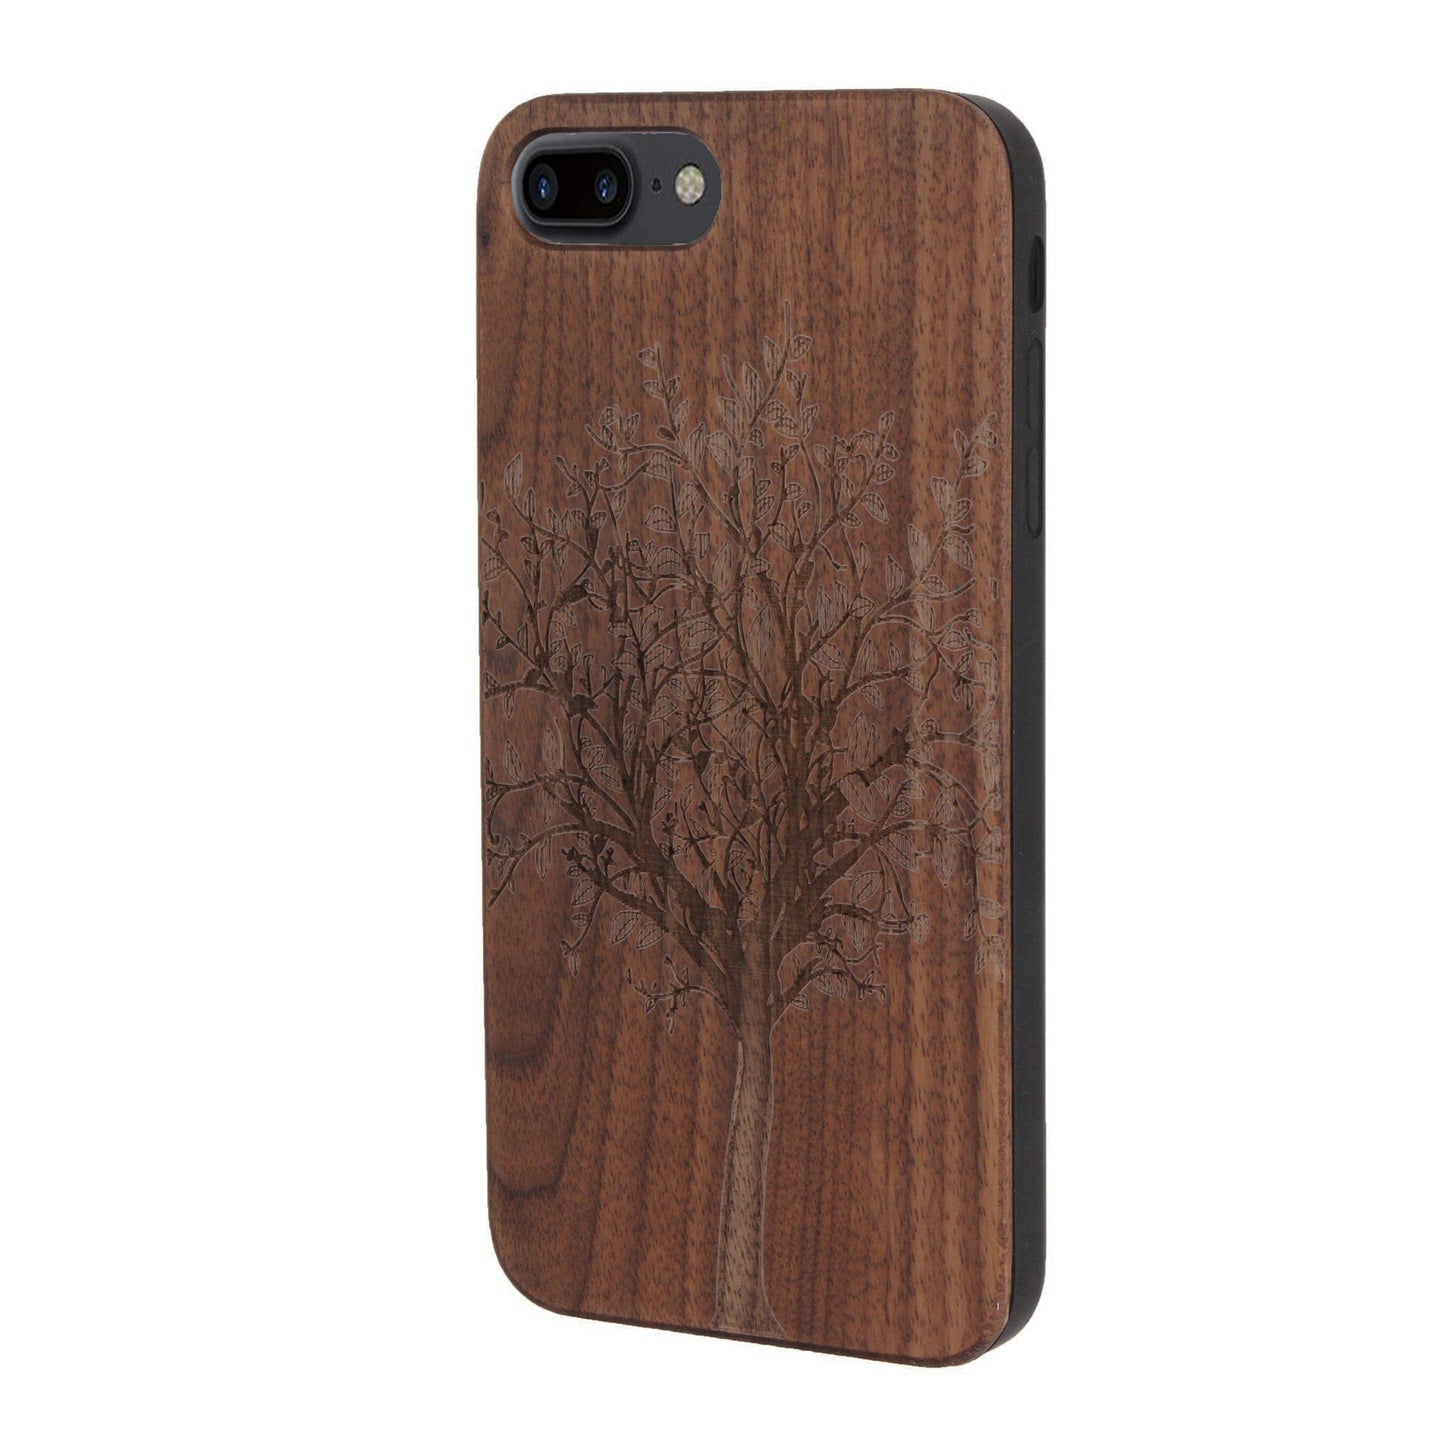 Lebensbaum Eden case made of walnut wood for iPhone 6/6S/7/8 Plus